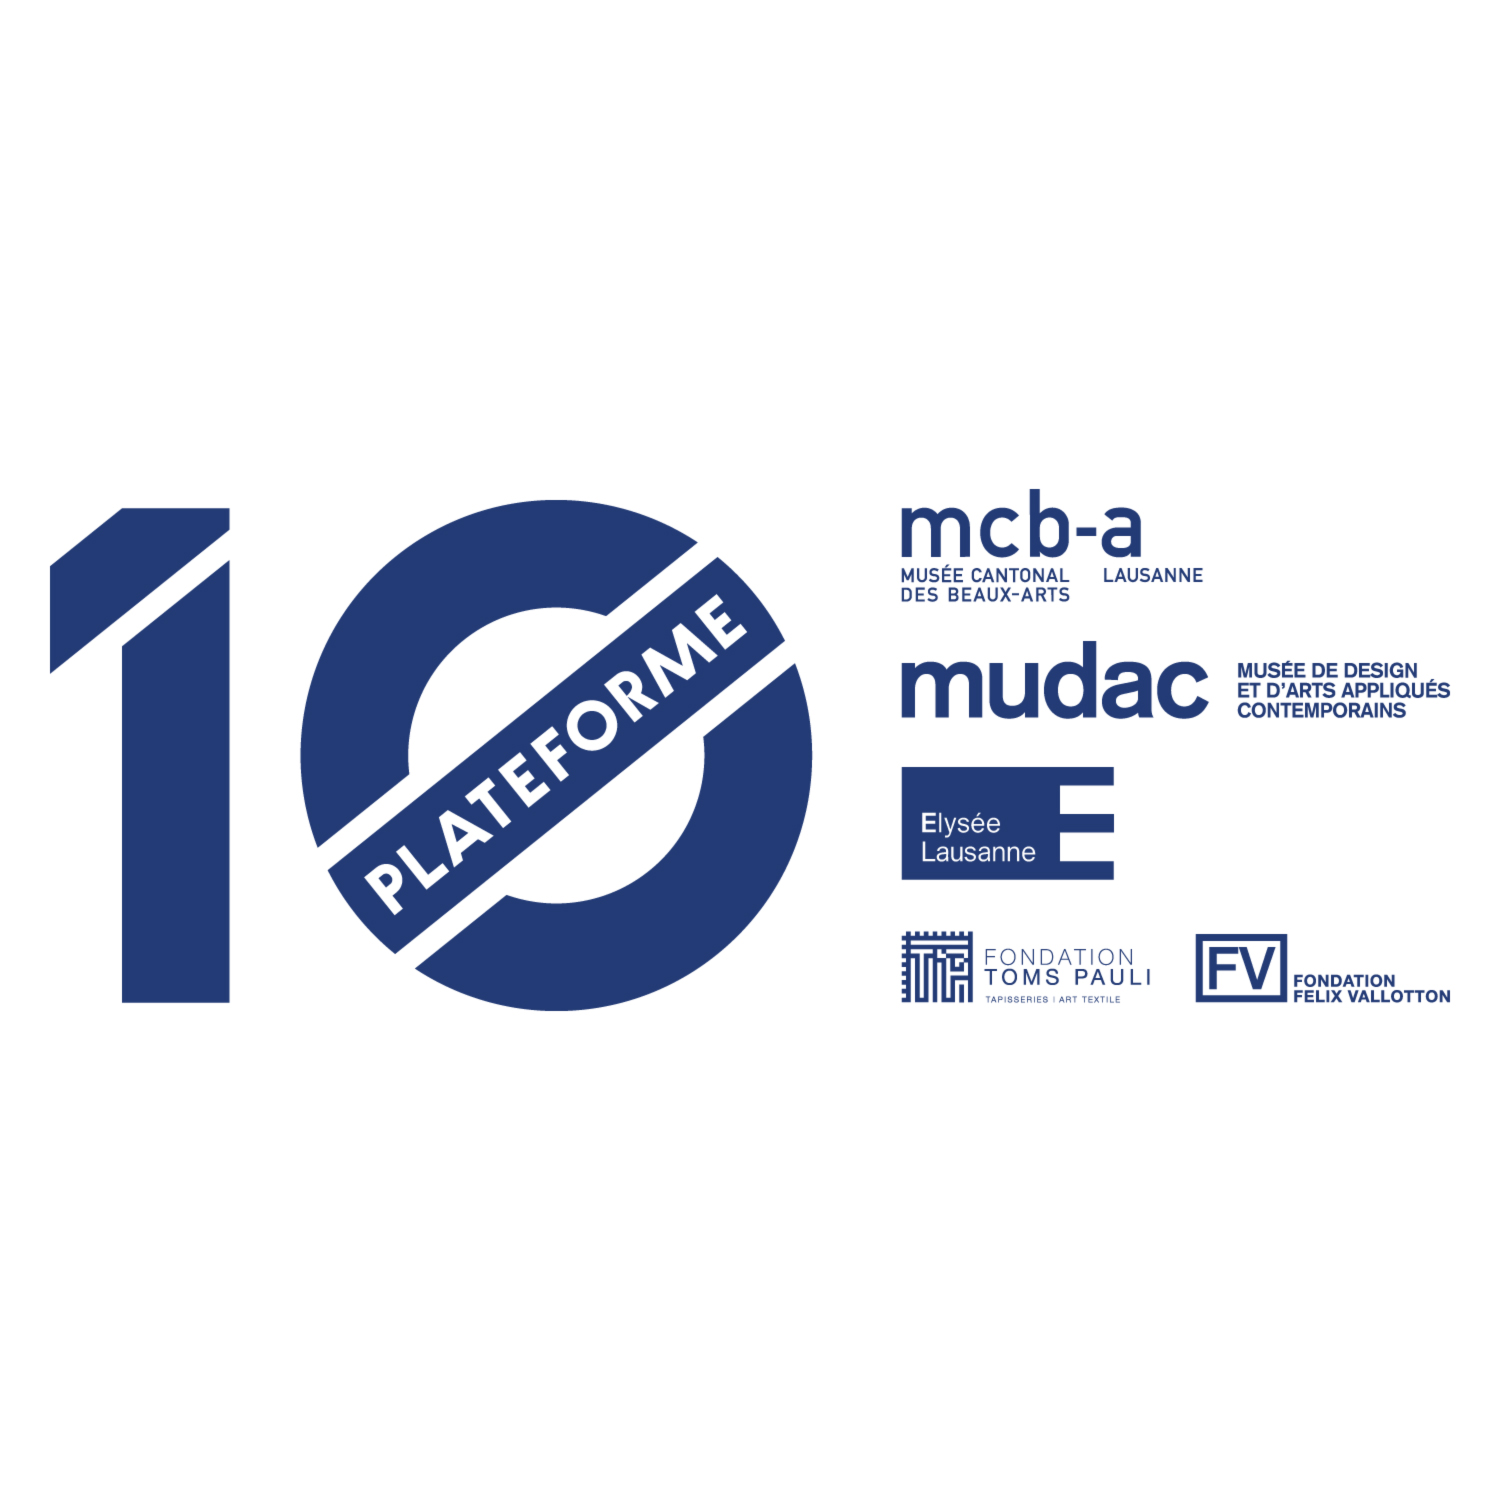 The new logo for Plateforme10 (Image courtesy MUDAC)